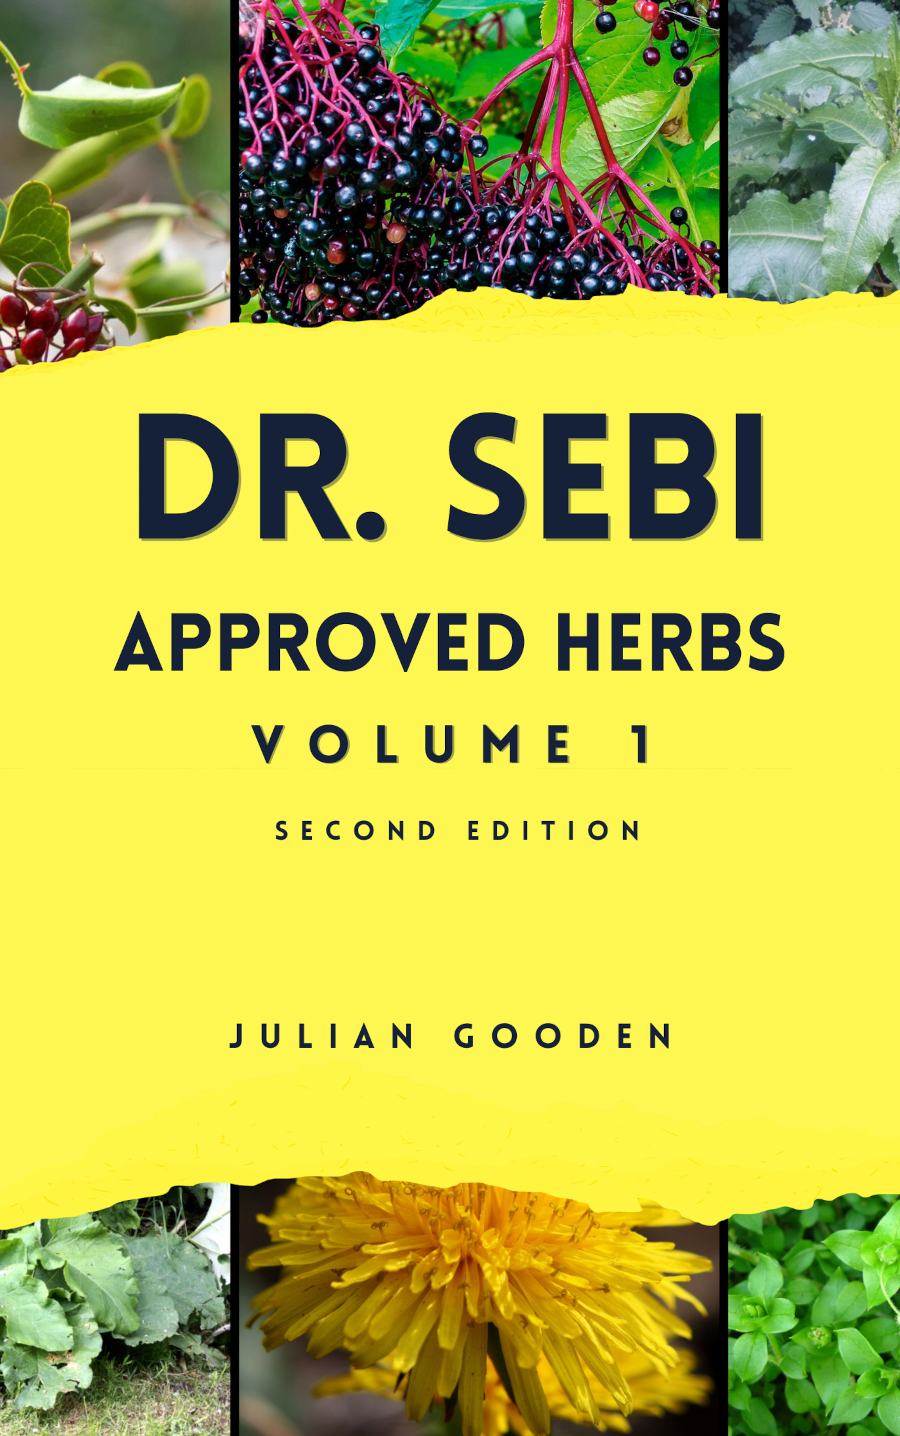 DR. SEBI APPROVED HERBS - VOL 1